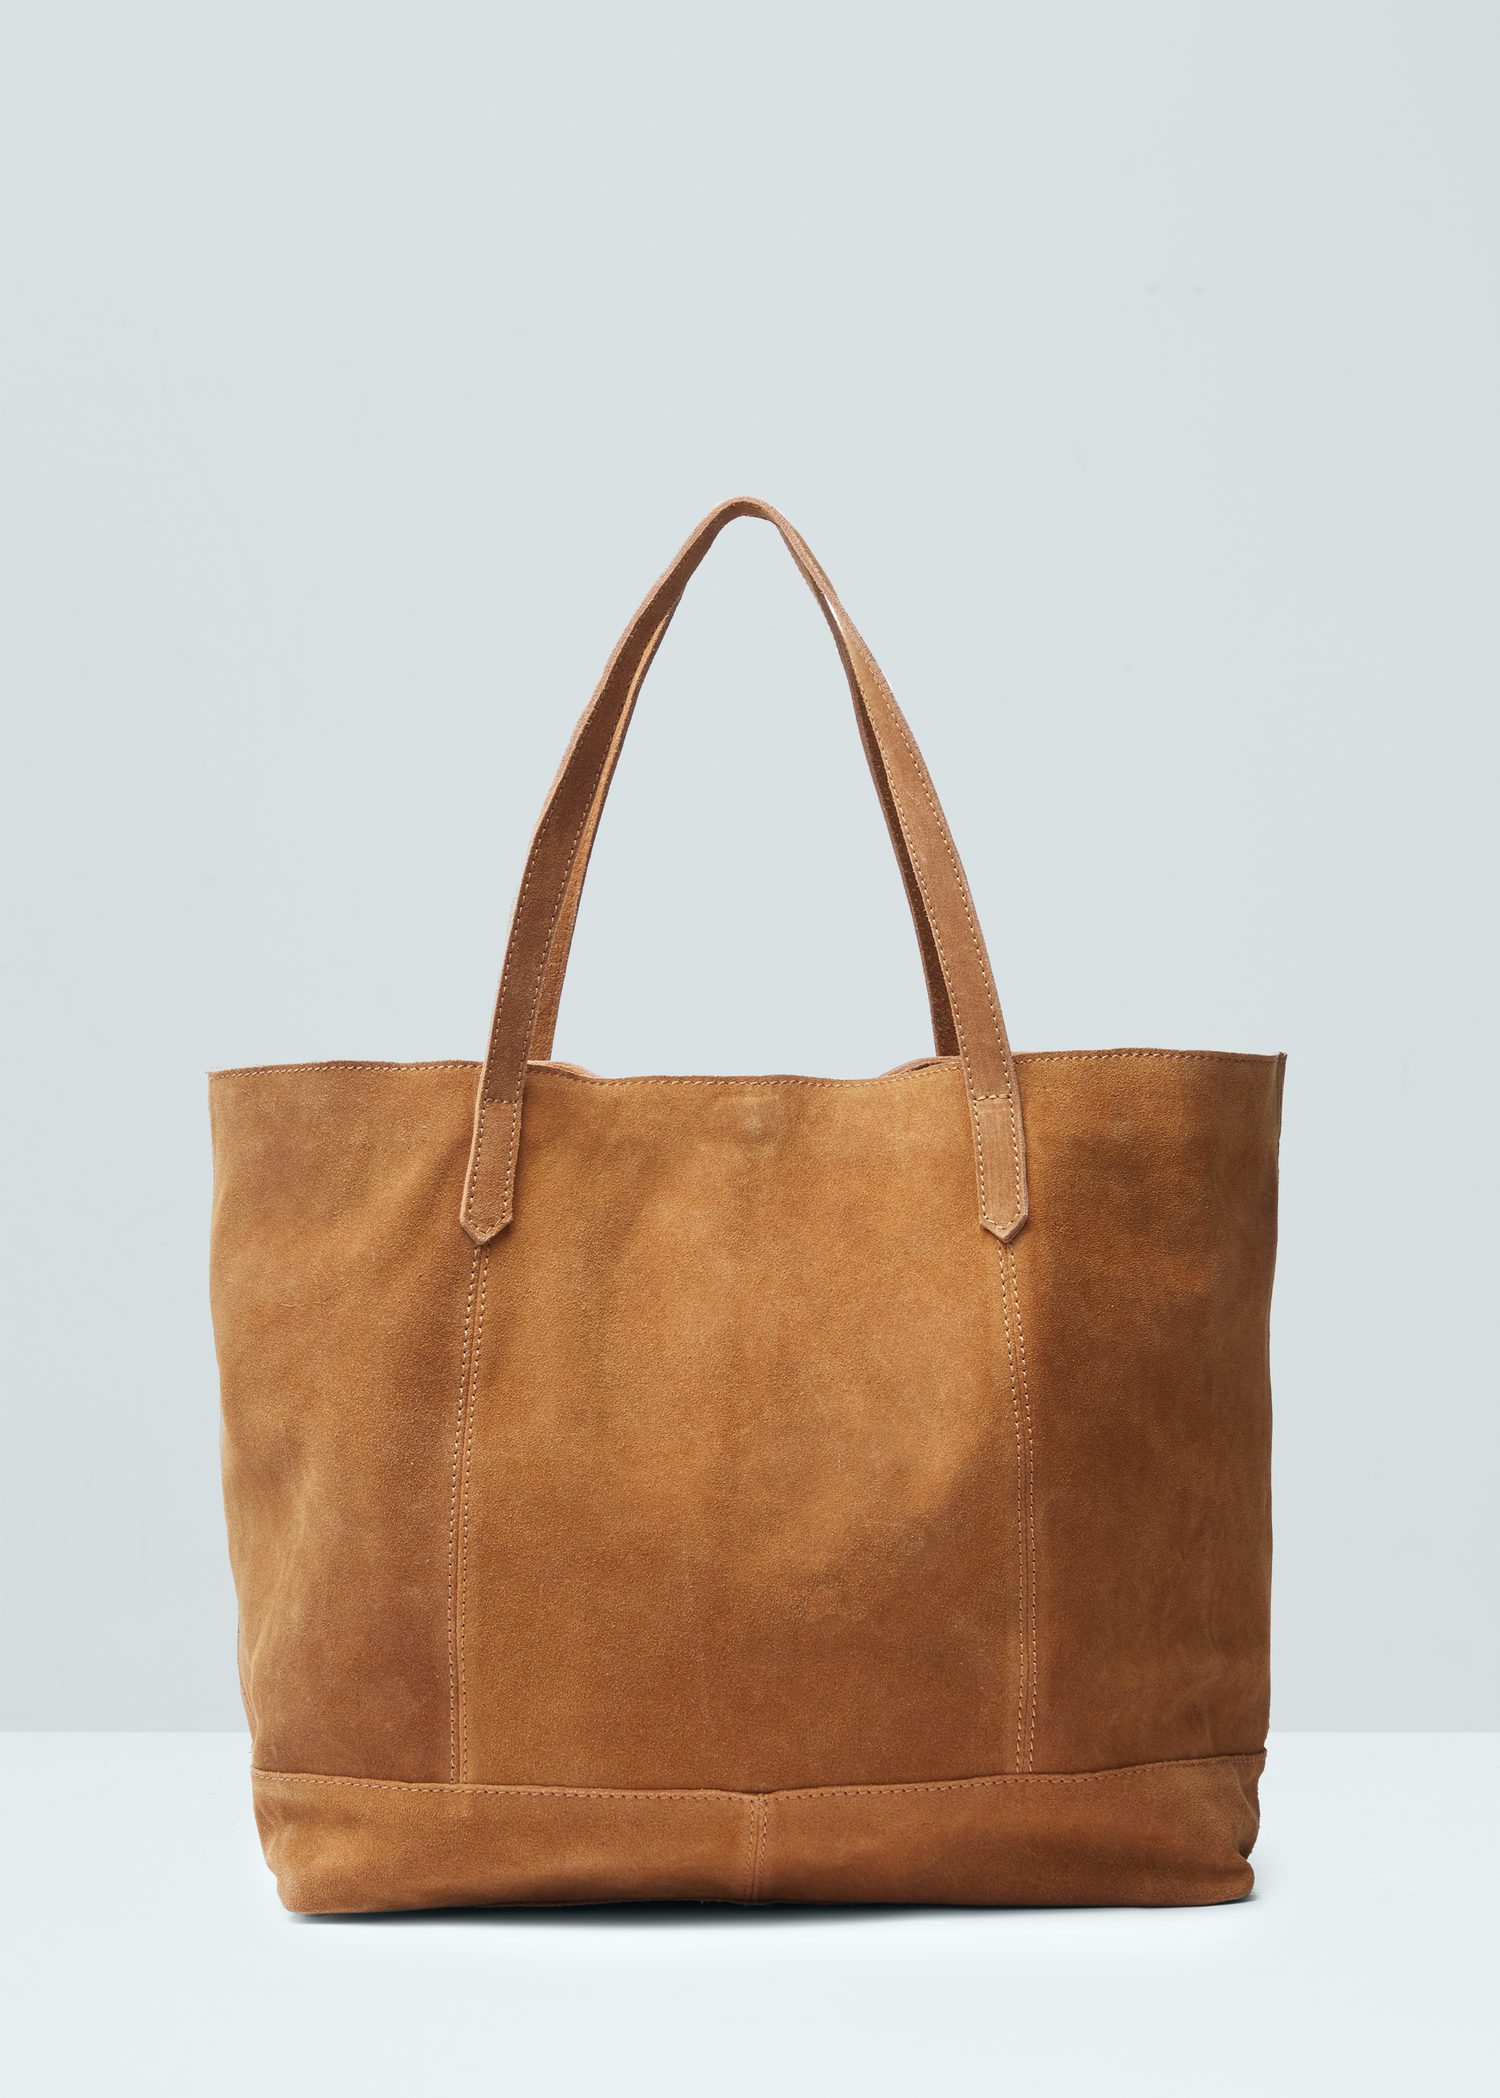 Mango Leather Shopper Bag in Brown - Lyst